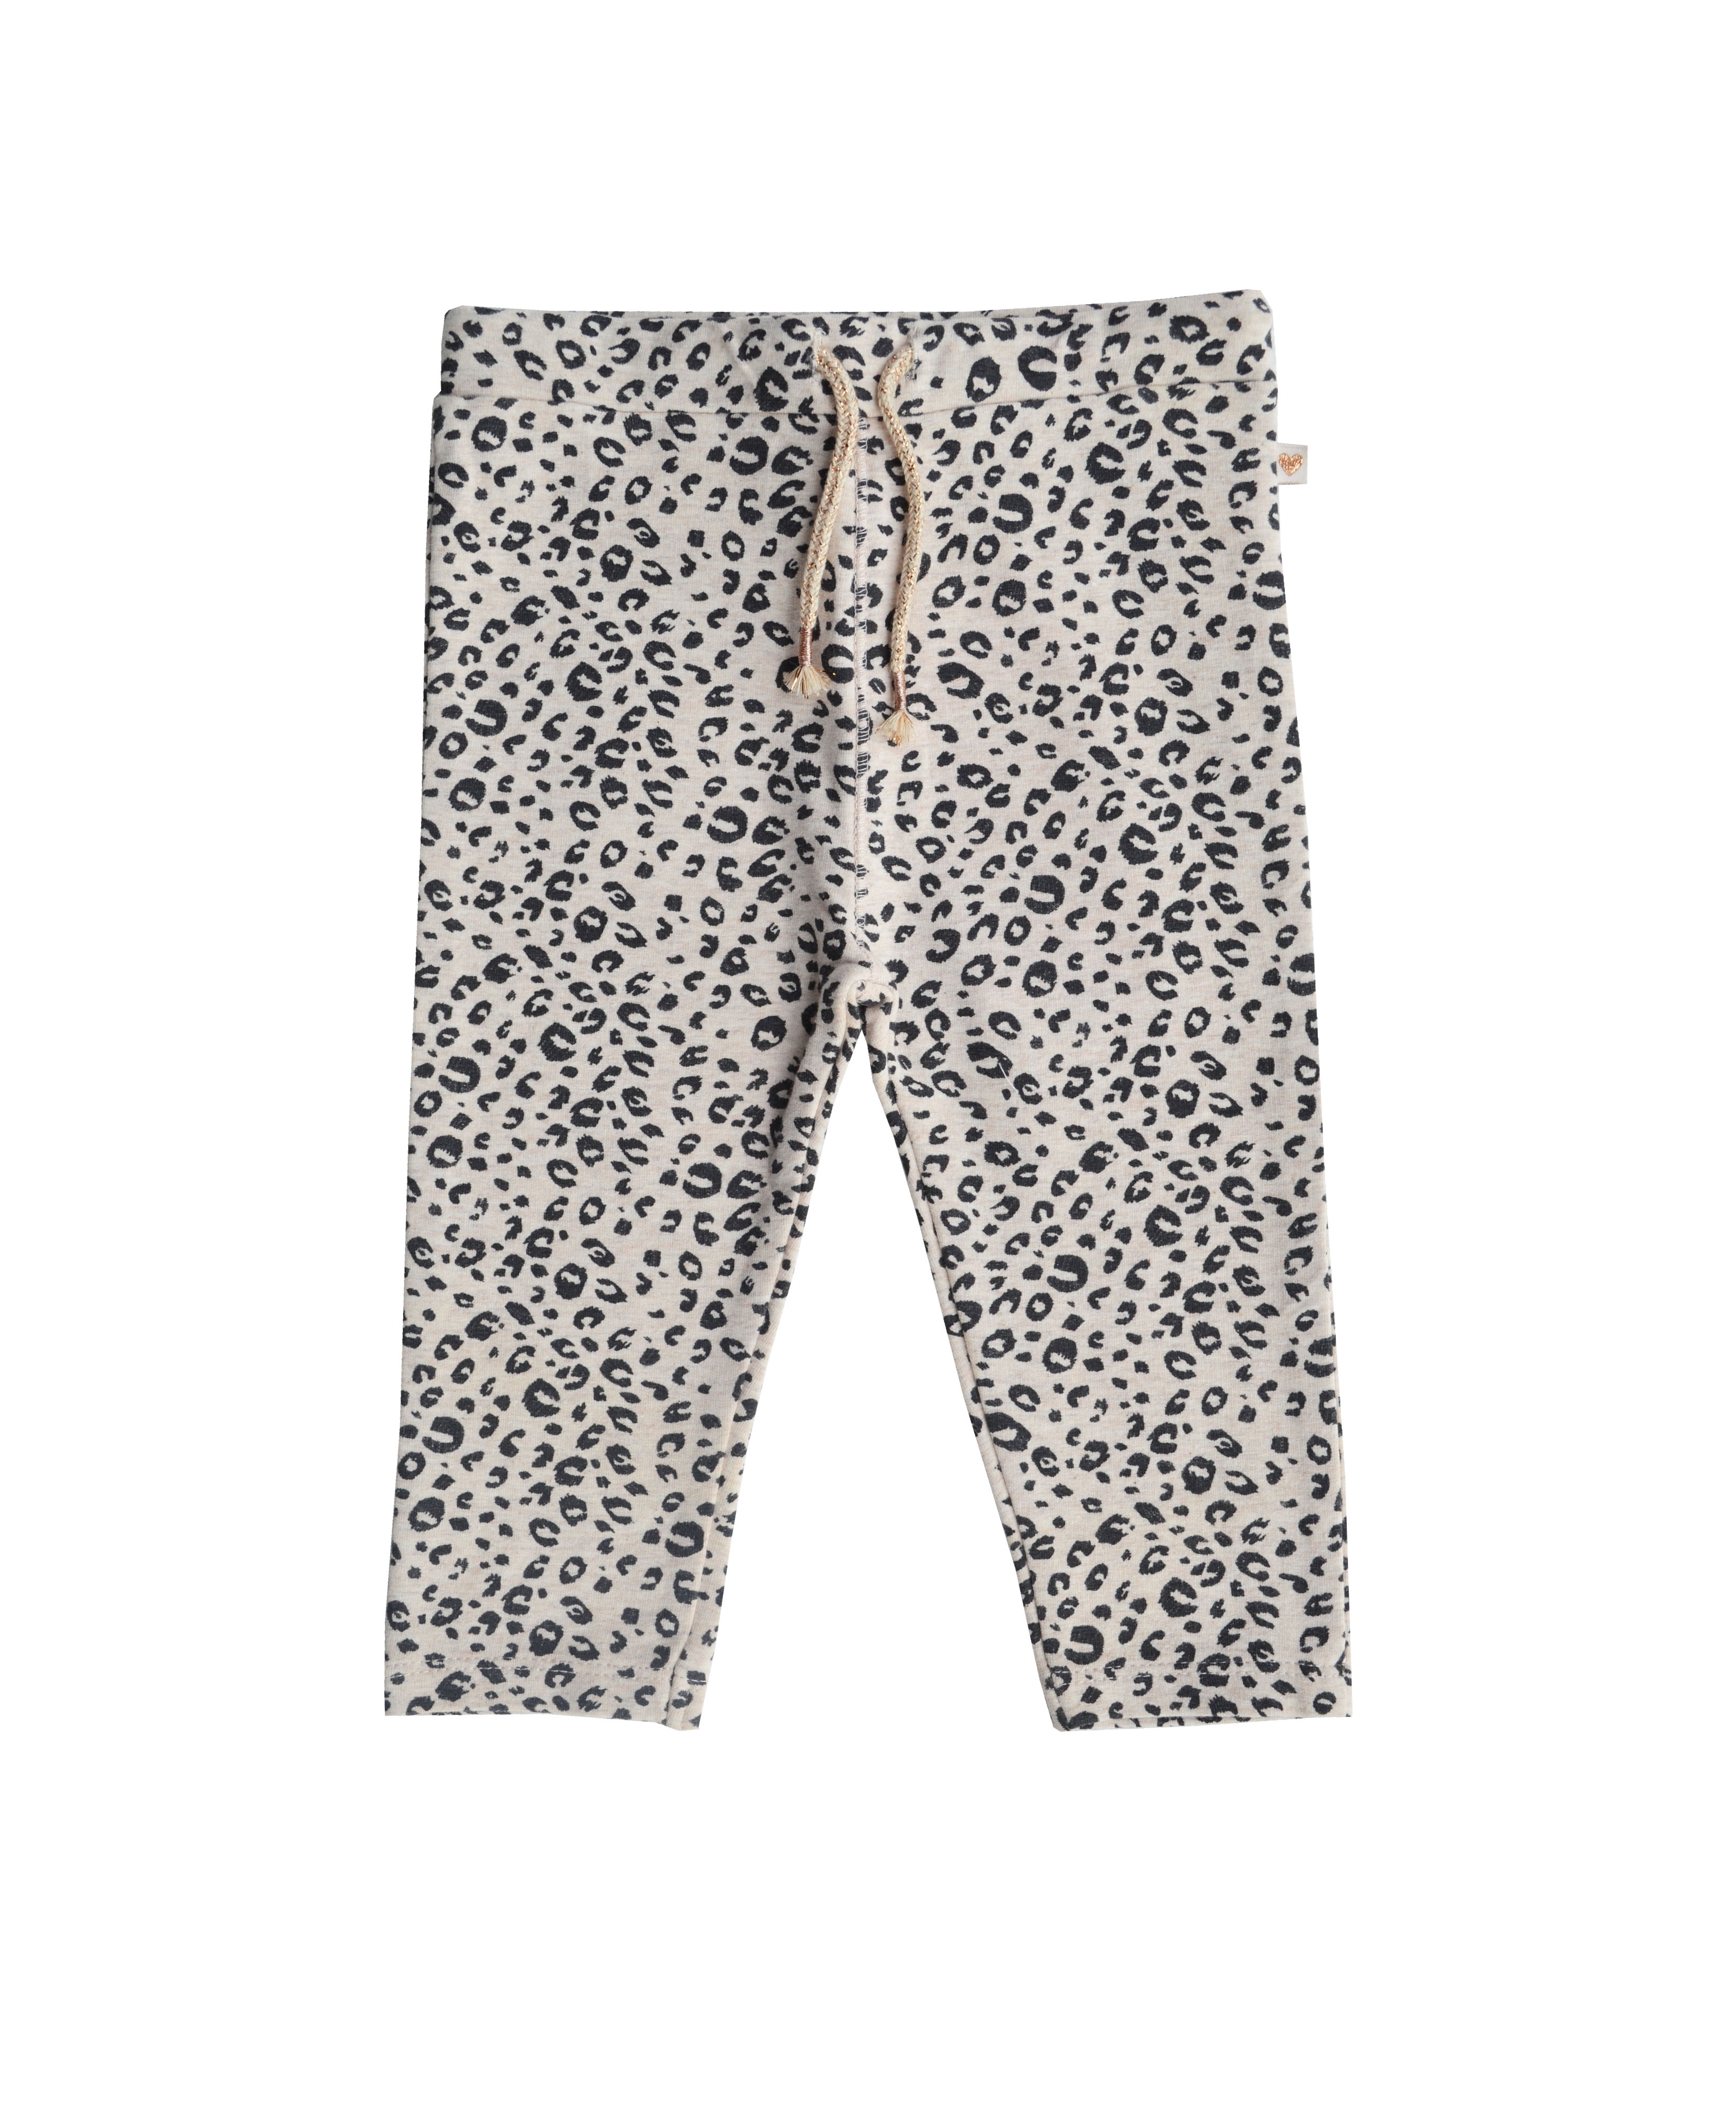 Babeez | Allover Leopard Print Girls Pant (95% Cotton 5% Elasthan Fleece) undefined